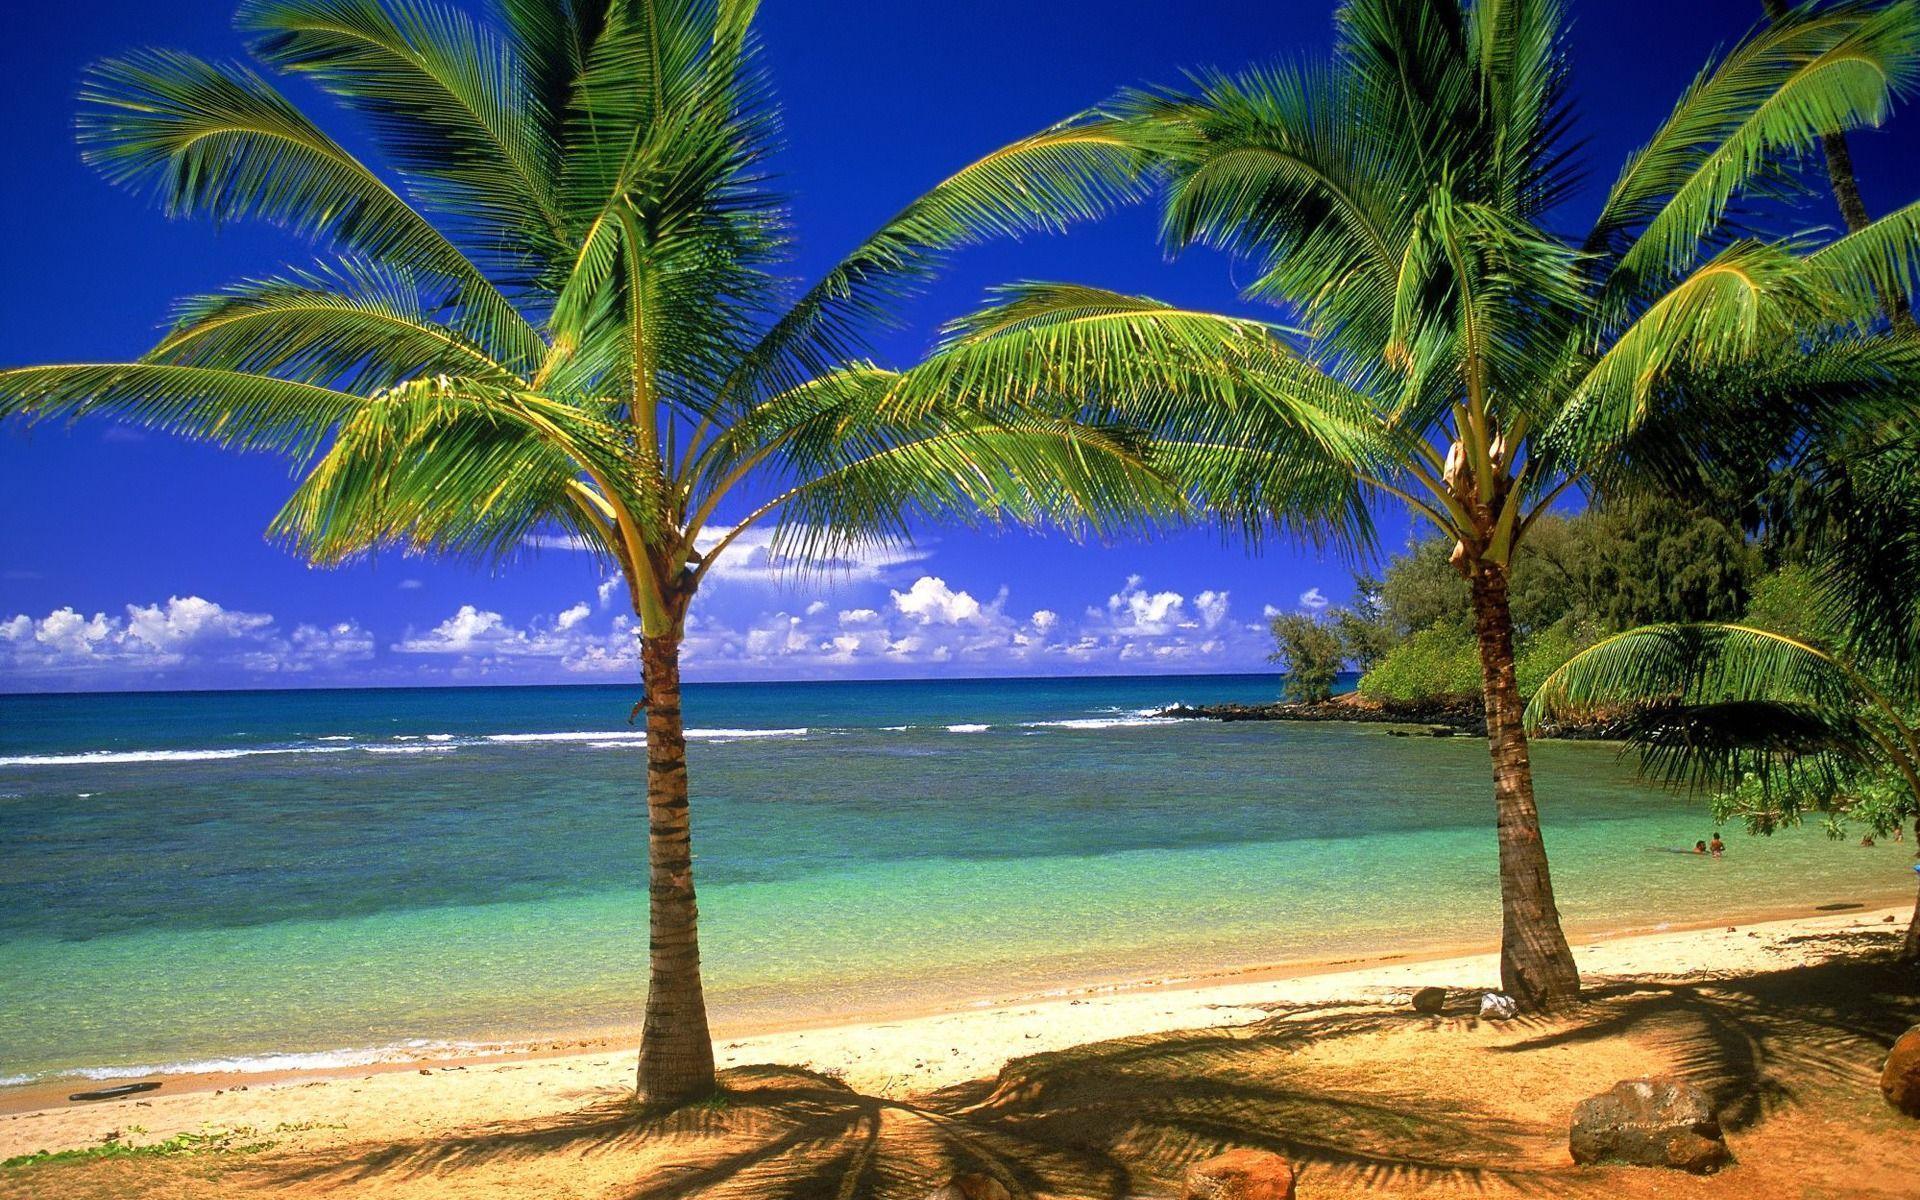 Palms on the beach wallpaper. Palms on the beach